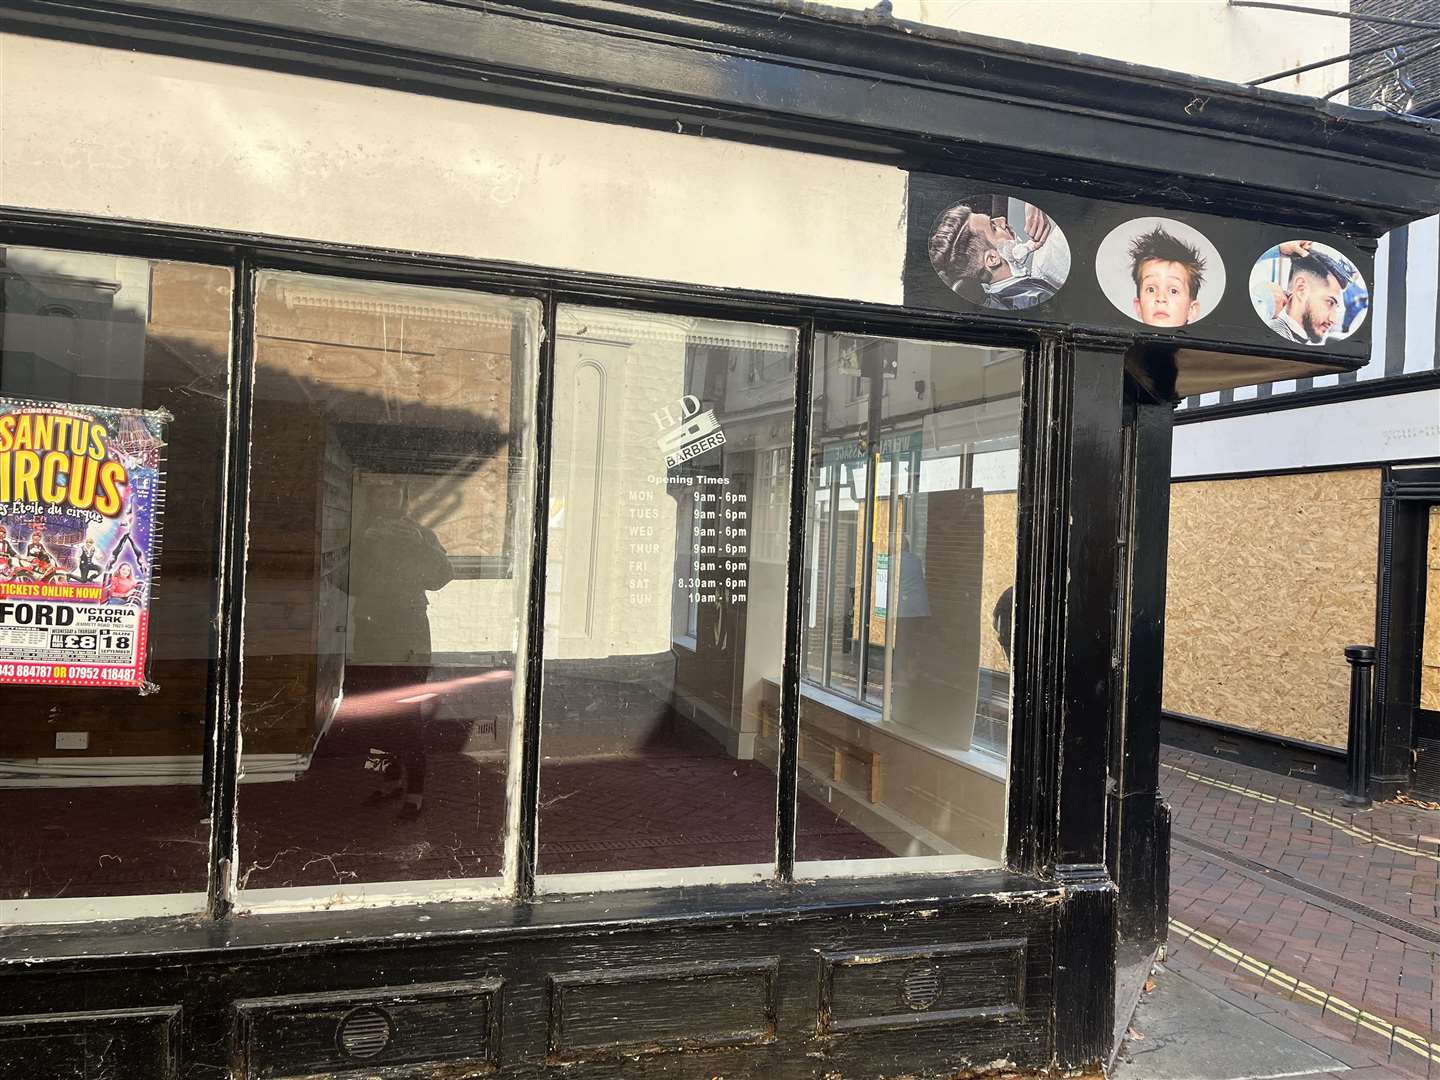 A barbers behind the John Wallis pub has closed its doors